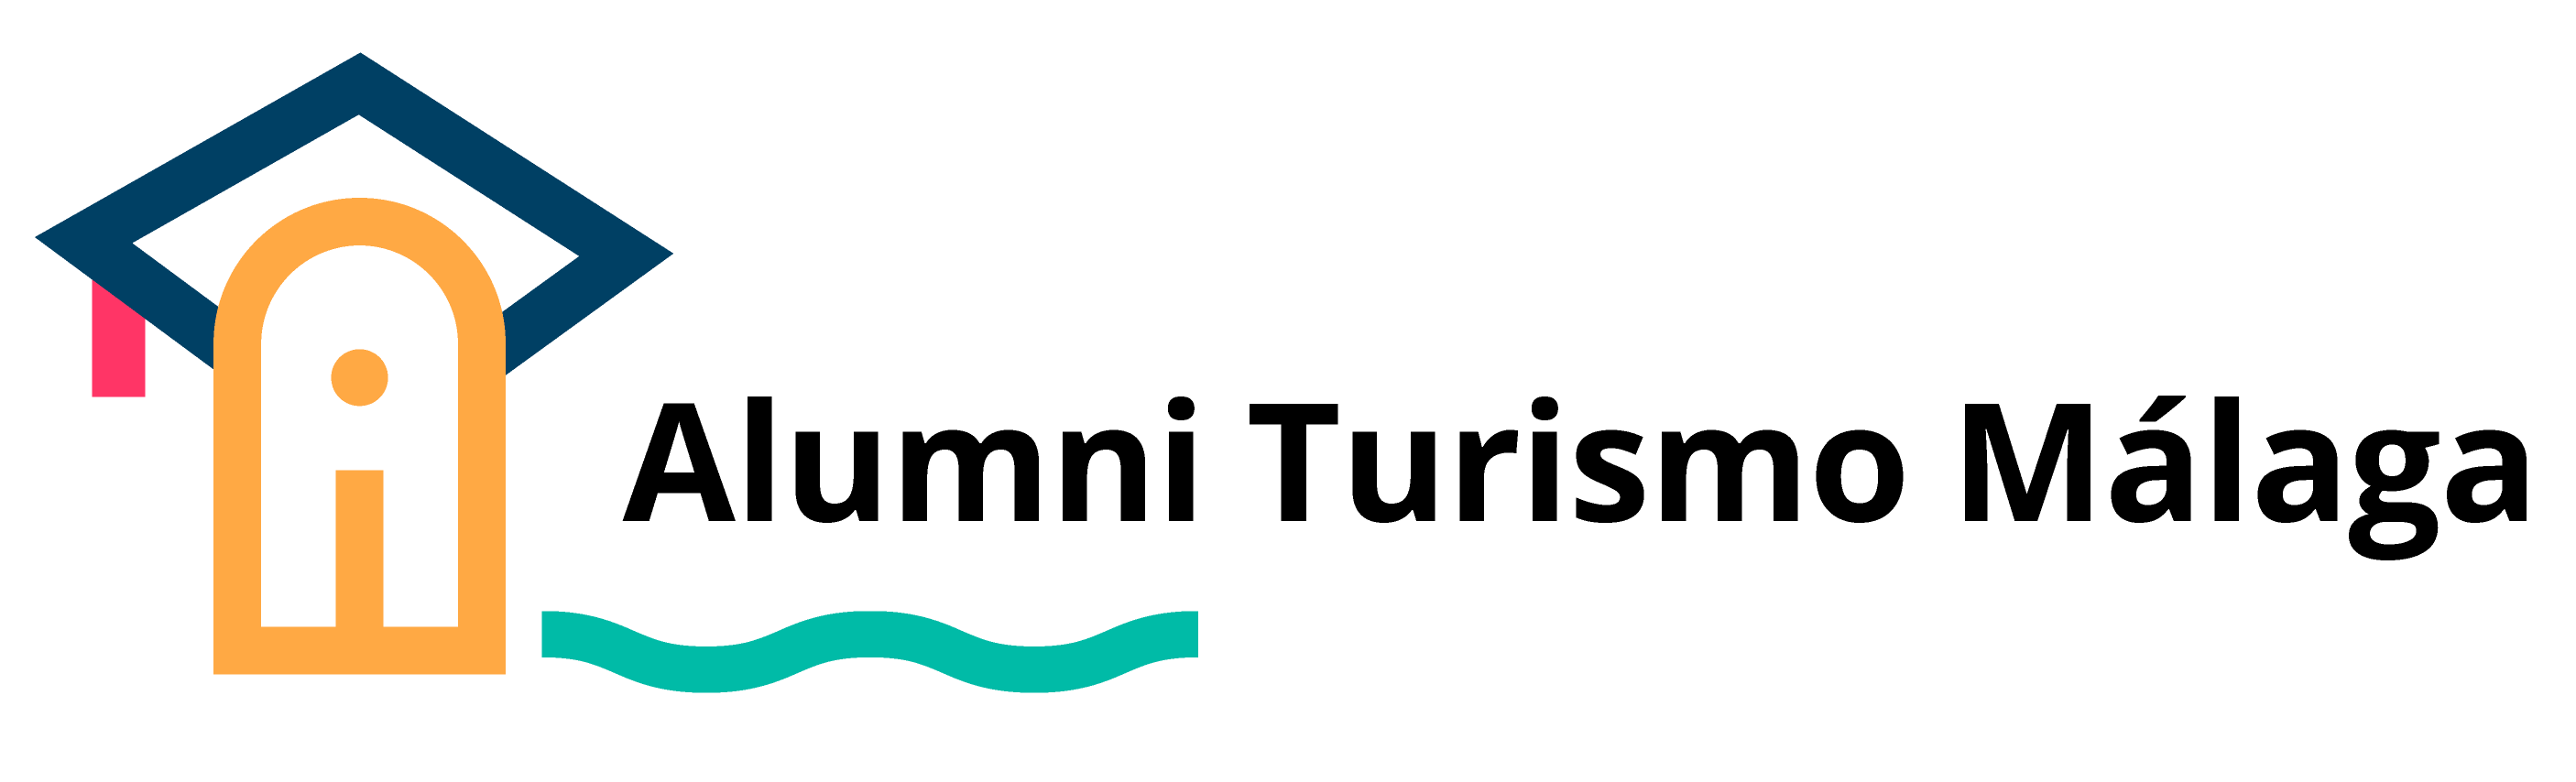 Logo Alumni Turismo Málaga - cabecera